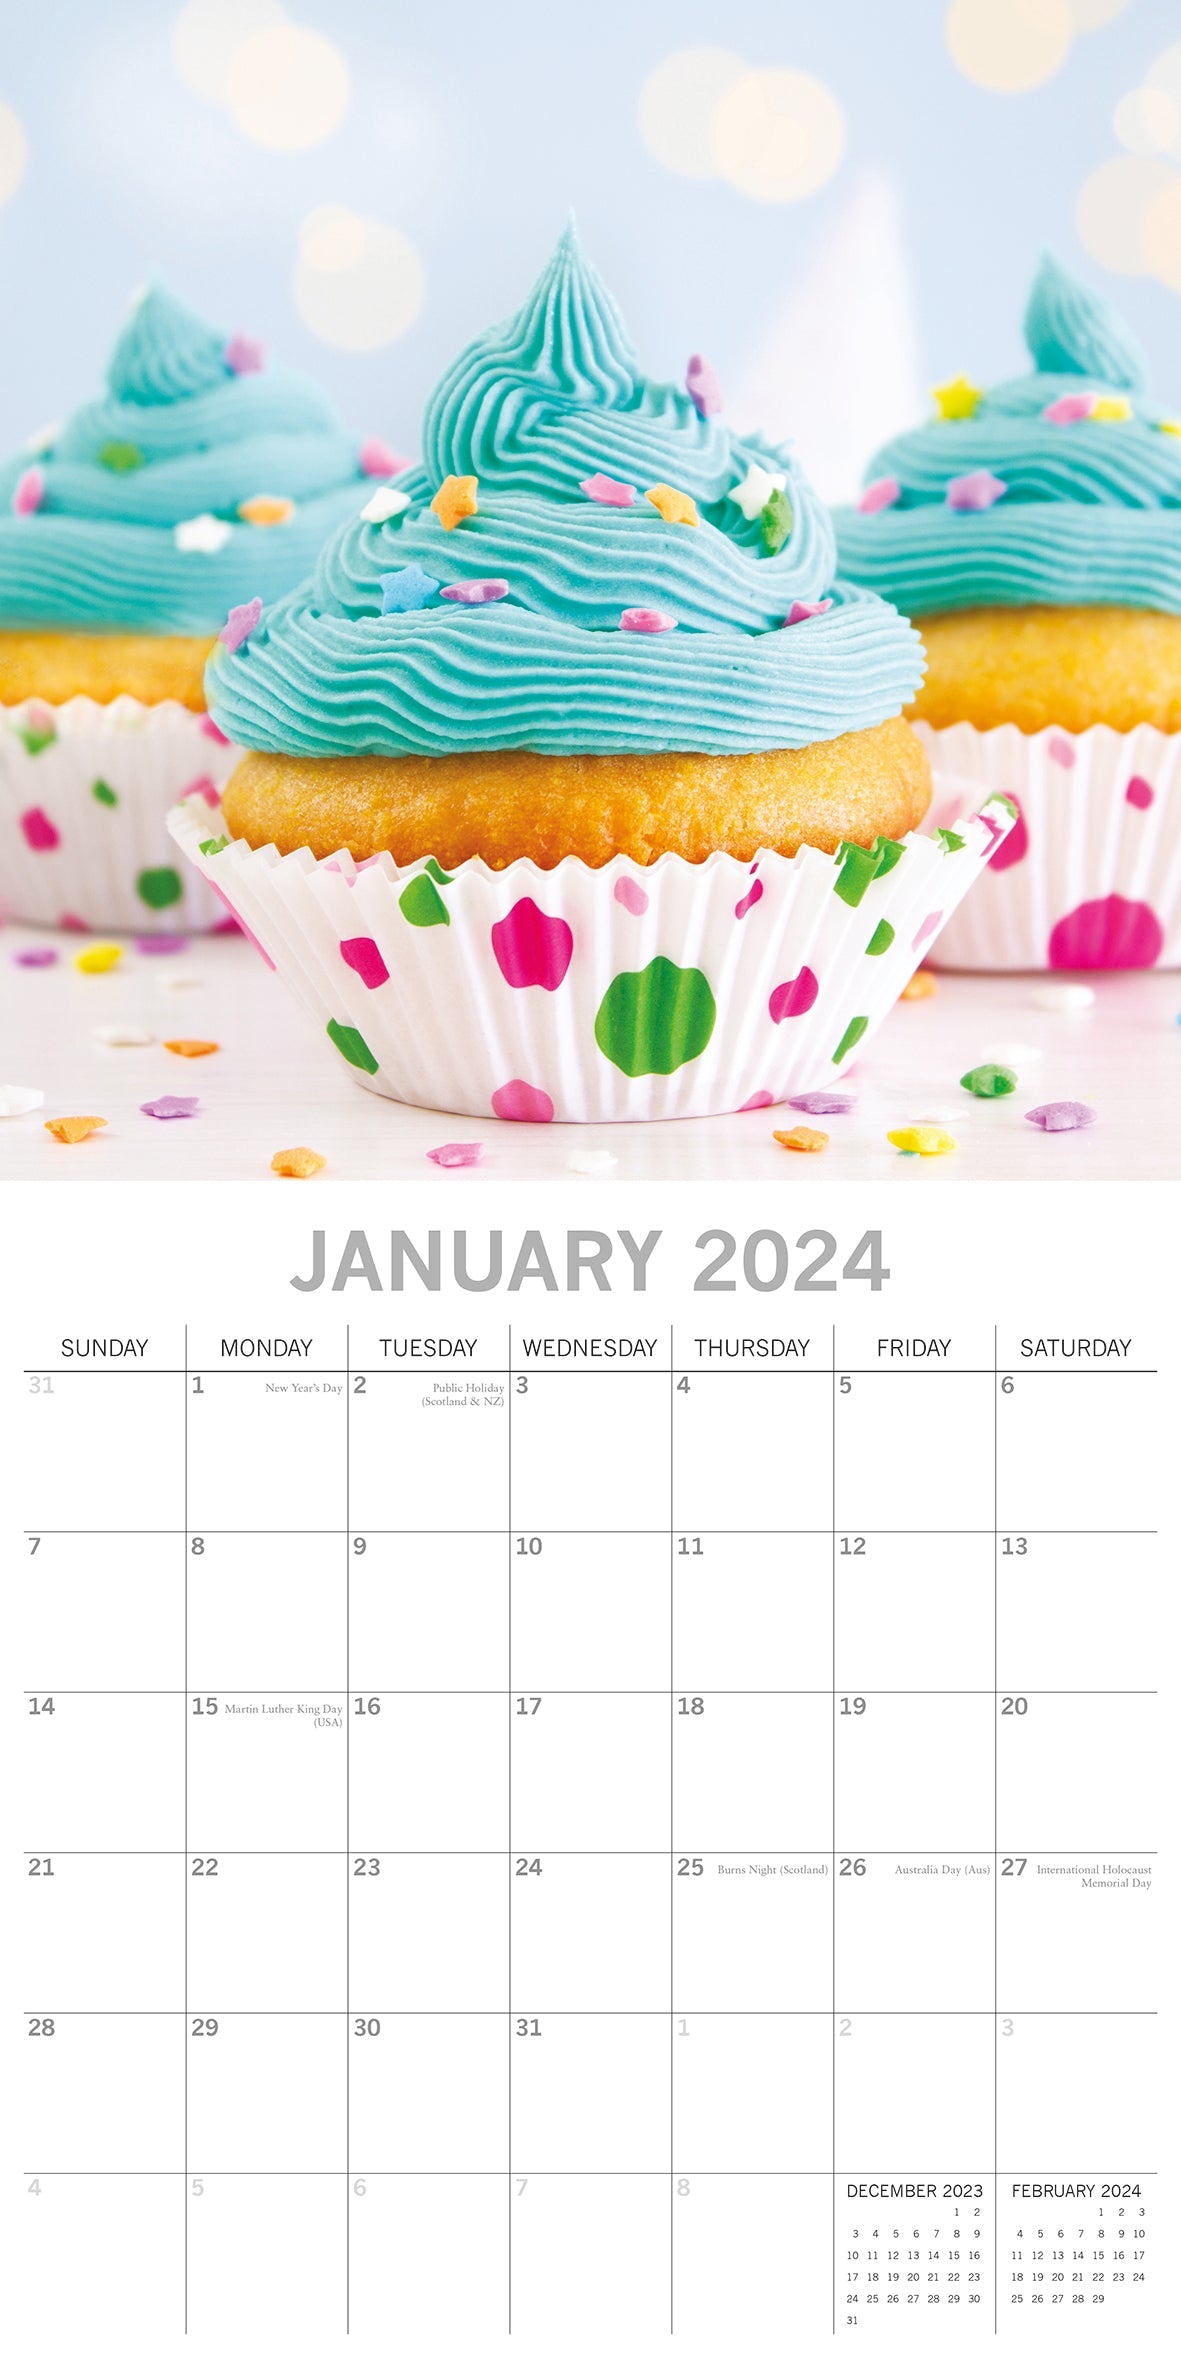 2022 Calendar for Cake lovers, Cakes Calendar